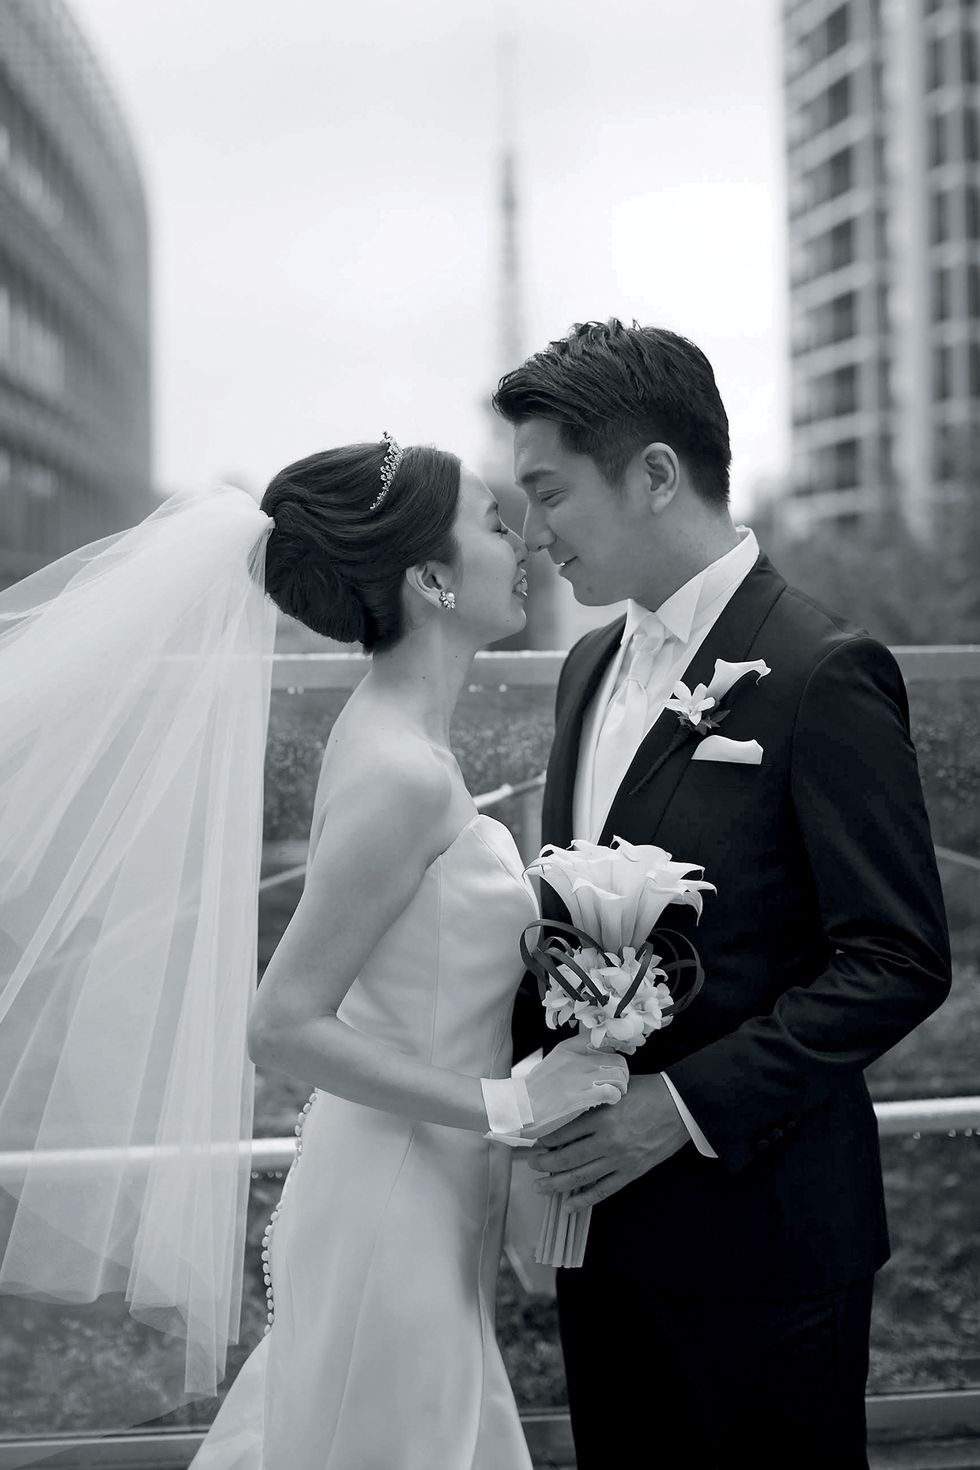 Photograph, White, Bride, Black, Wedding, Ceremony, Gown, Wedding dress, Black-and-white, Monochrome photography, 